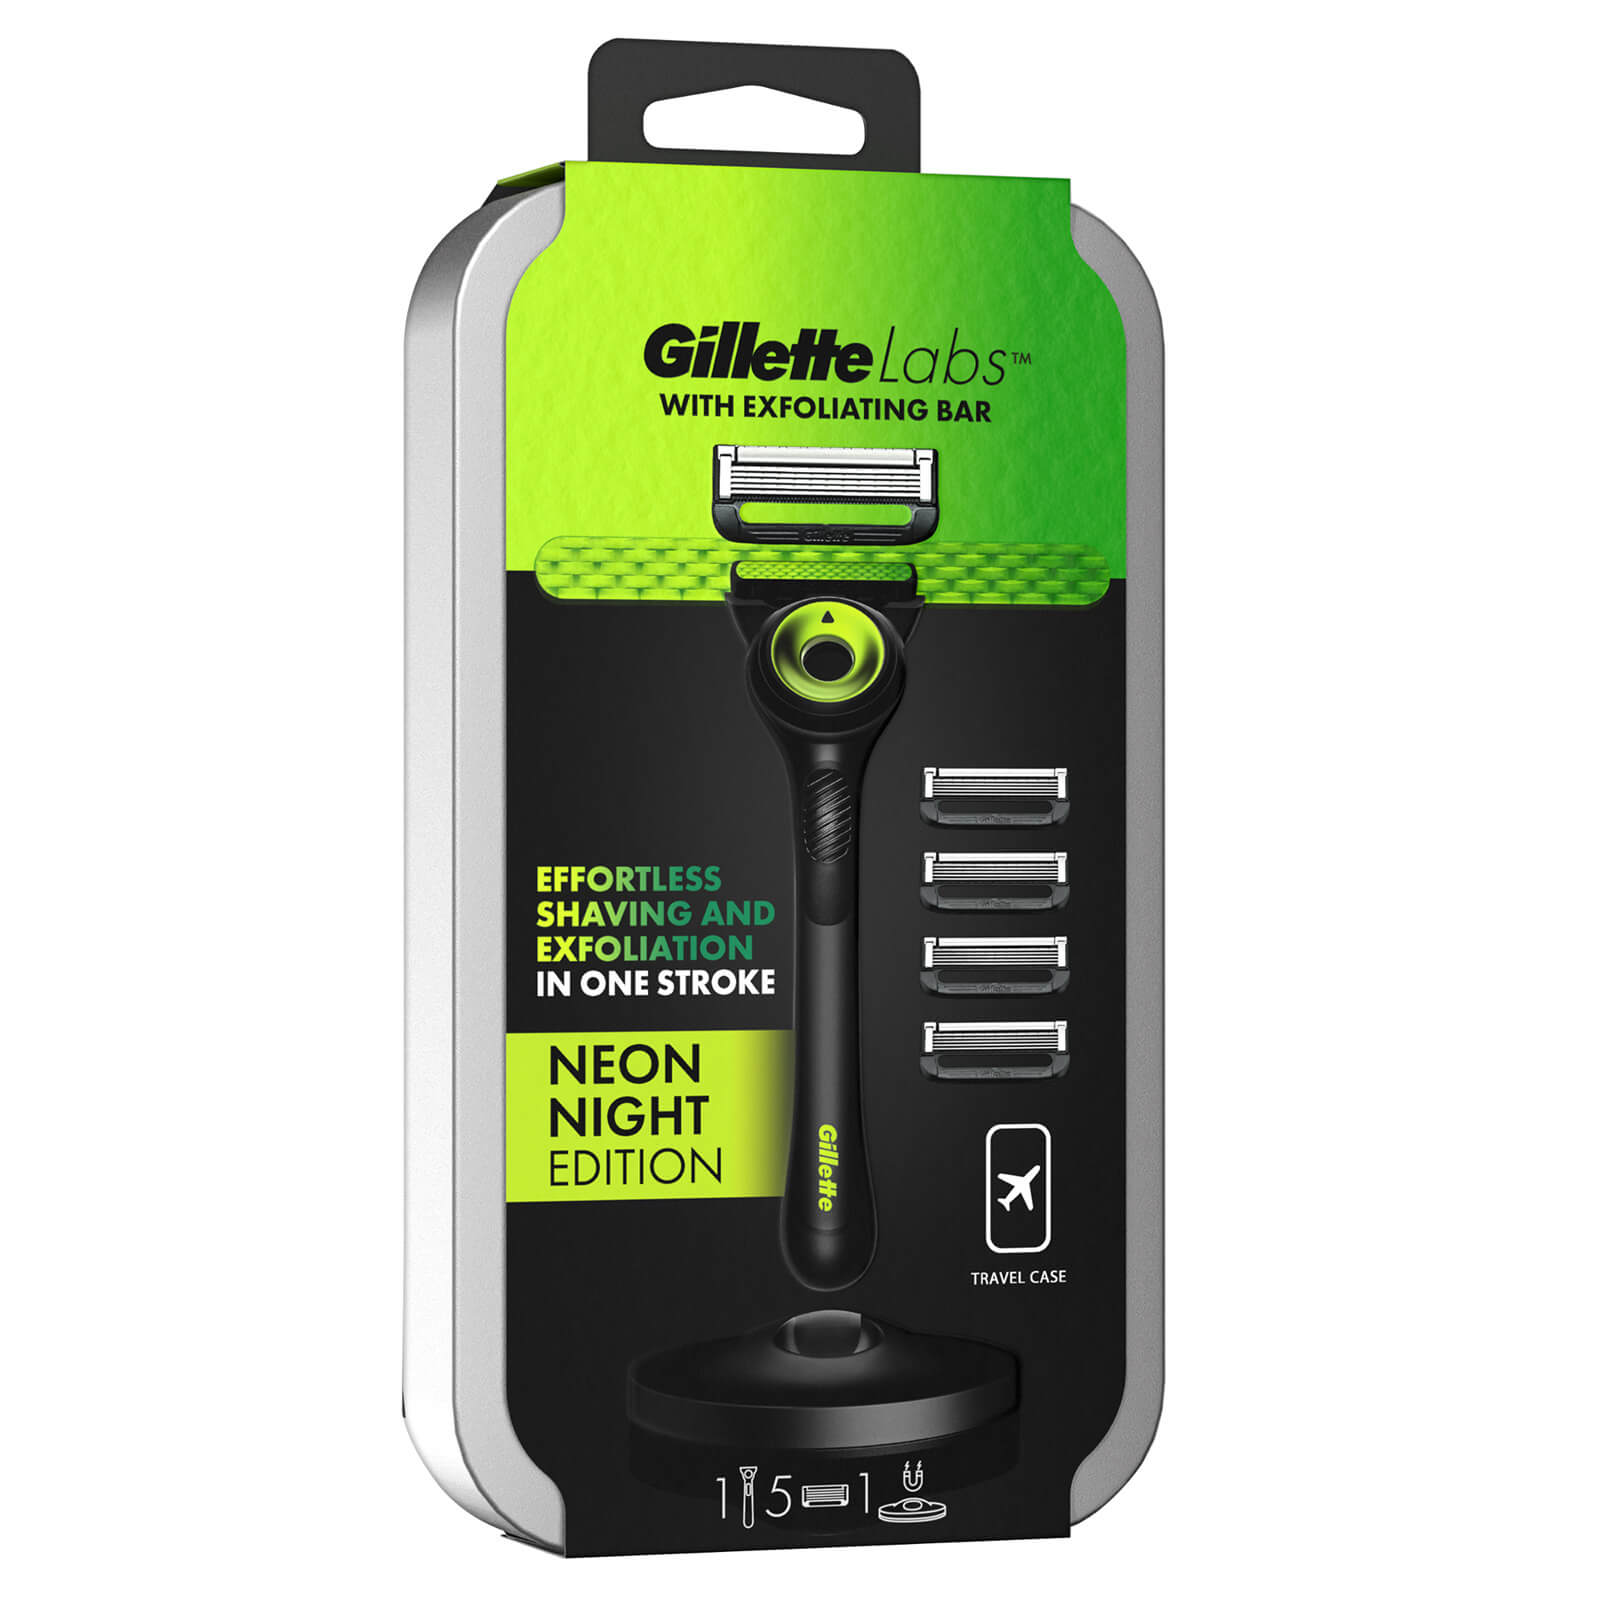 Gillette Labs Razor  Travel Case and 4 Blade Refills - Neon Night Green